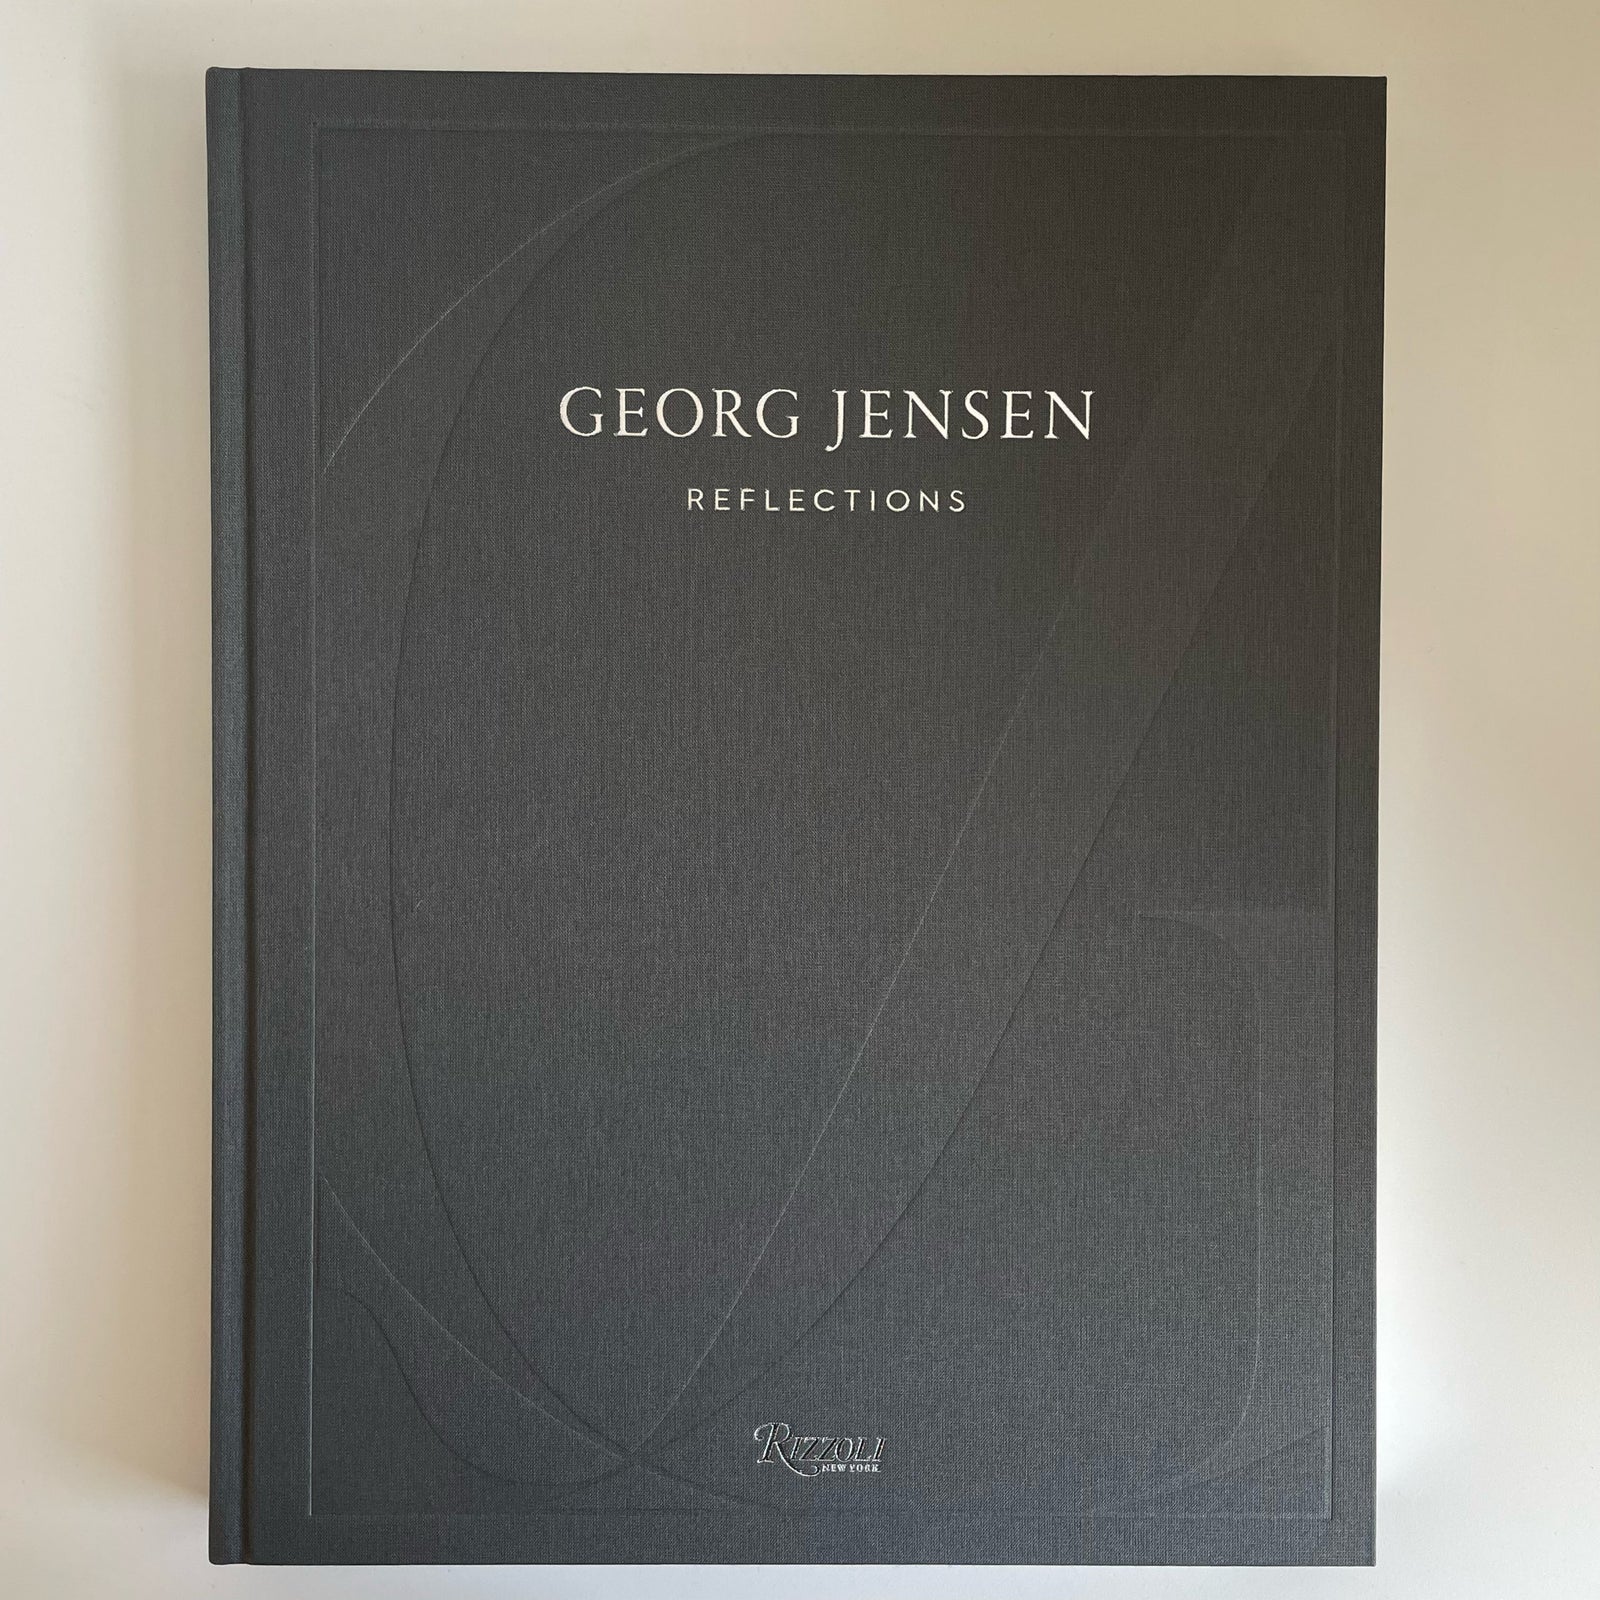 Georg Jensen: Reflections, Murray Moss, emne: design